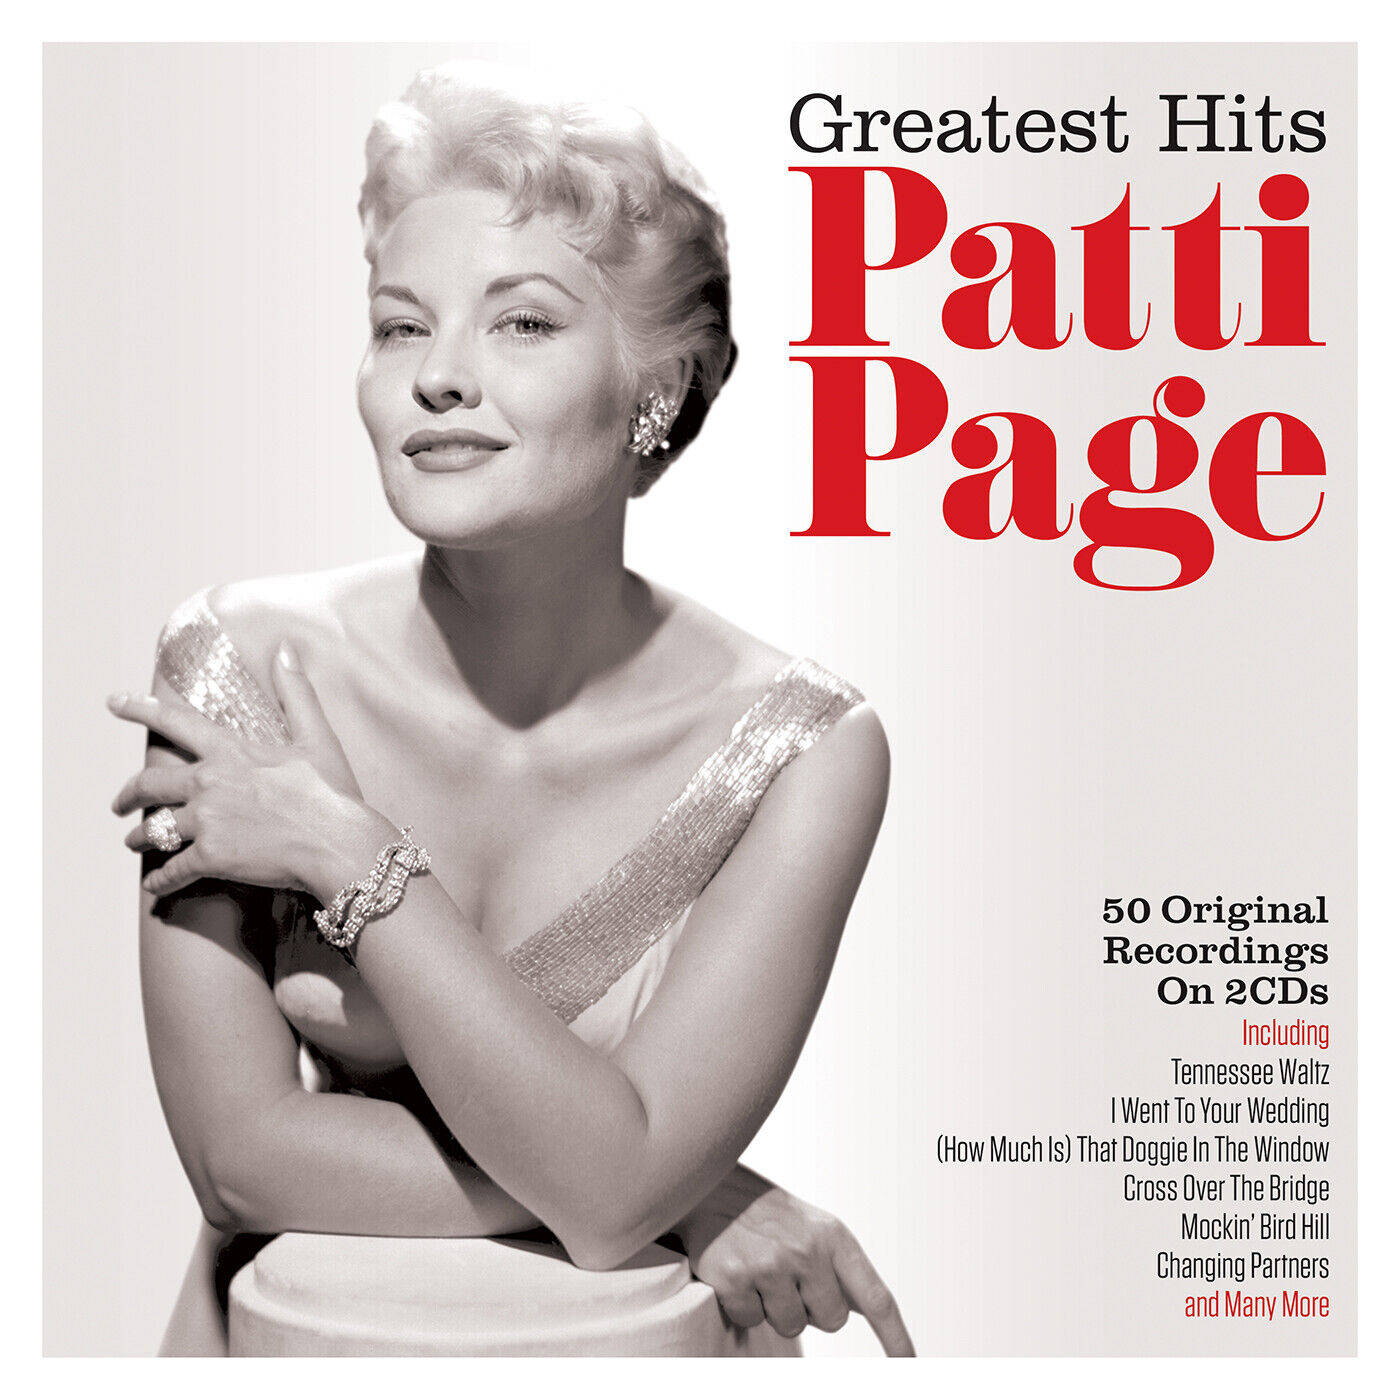 Patti Page Best Selling Female Artist Wallpaper